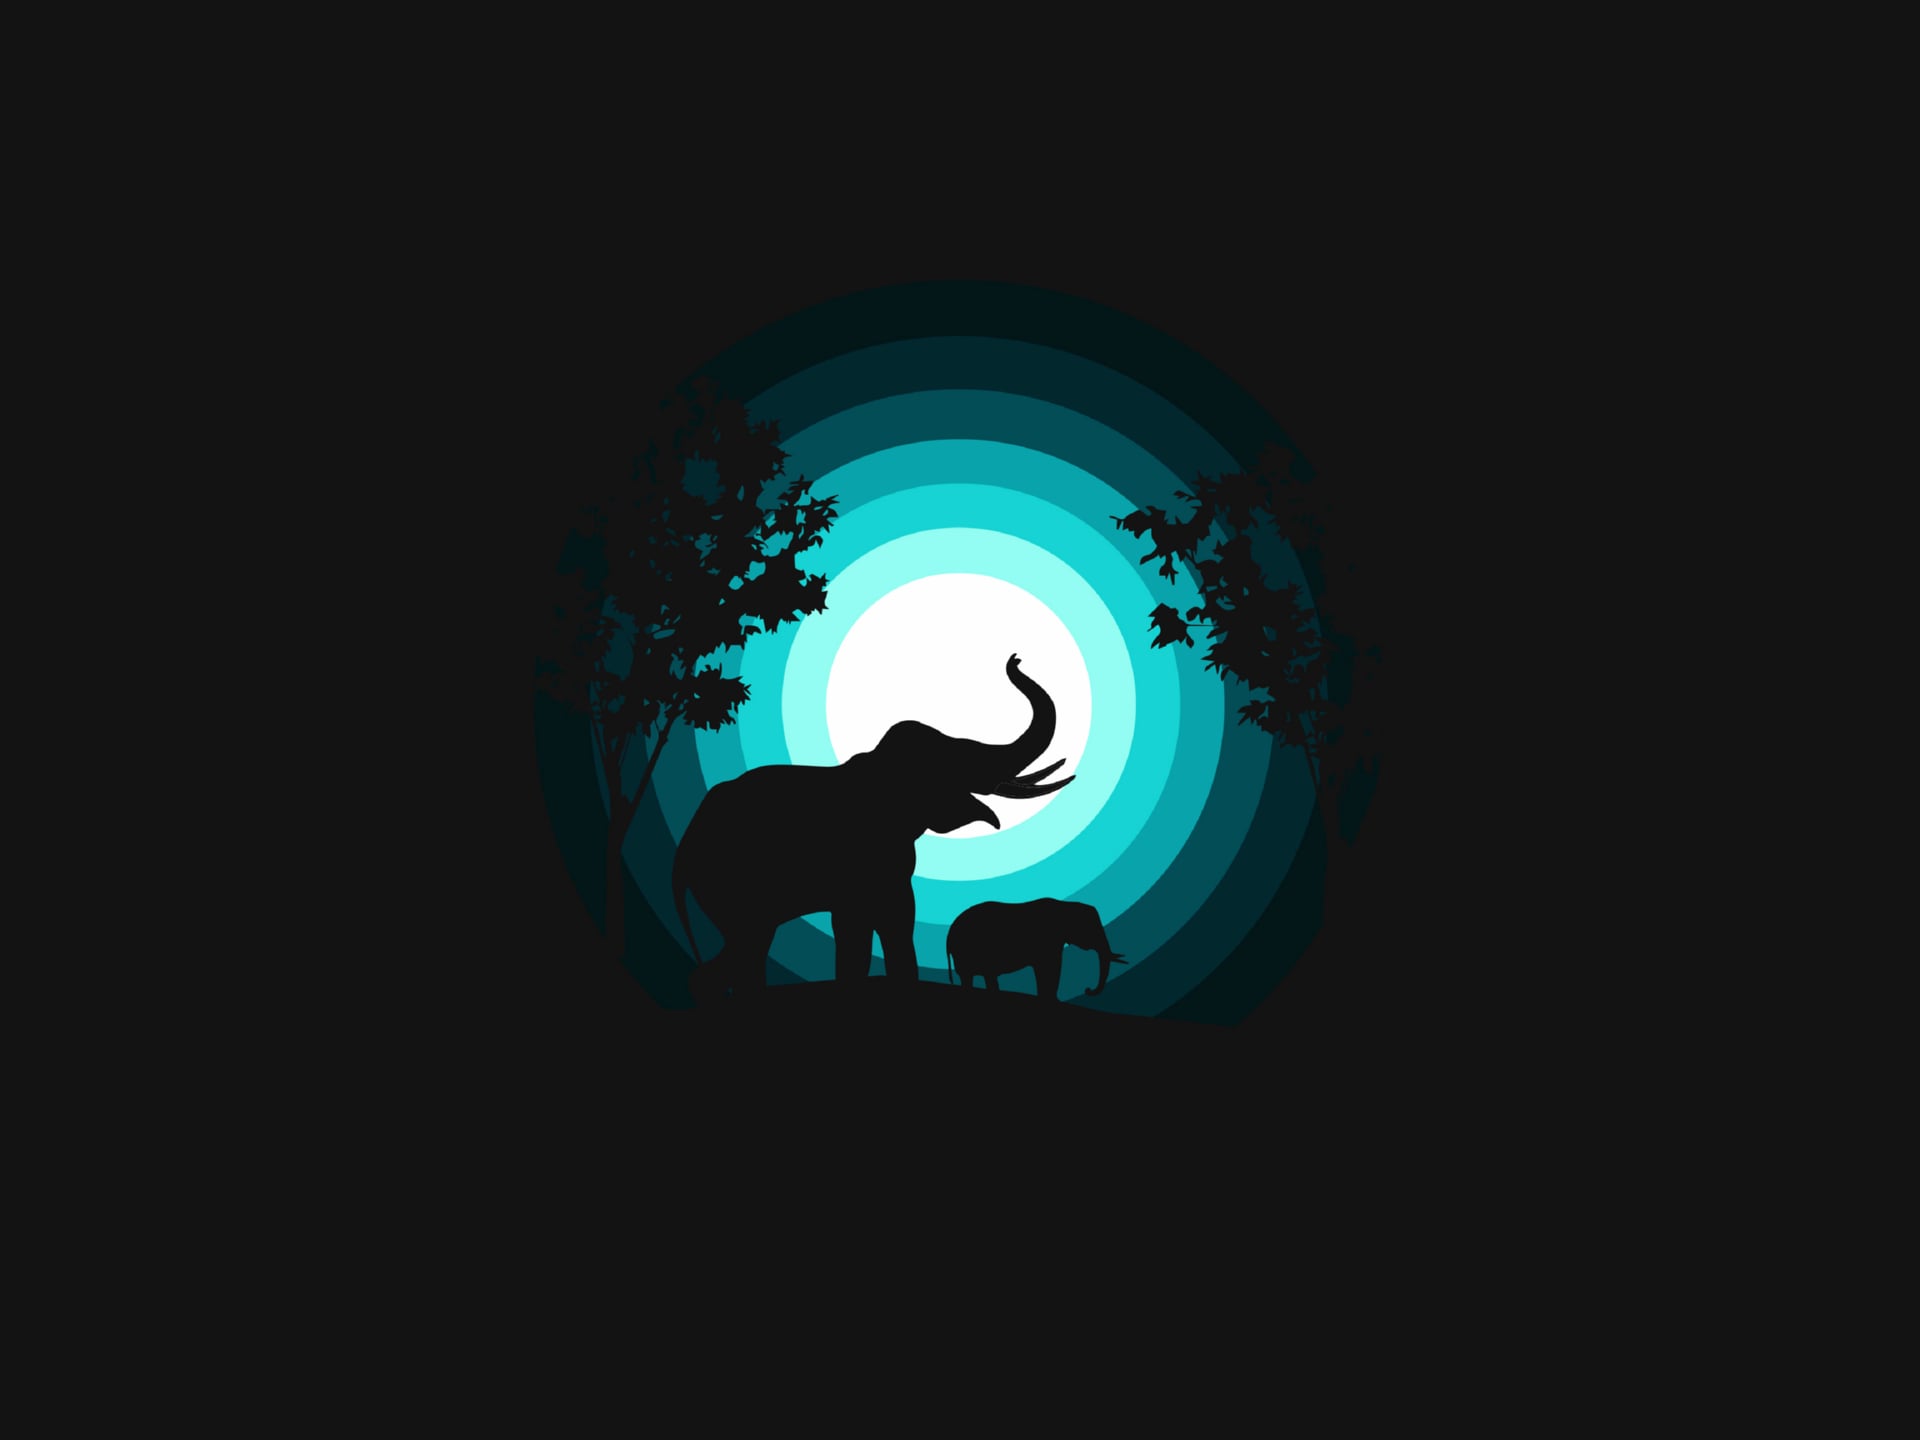 Digital Art Elephant wallpapers HD quality